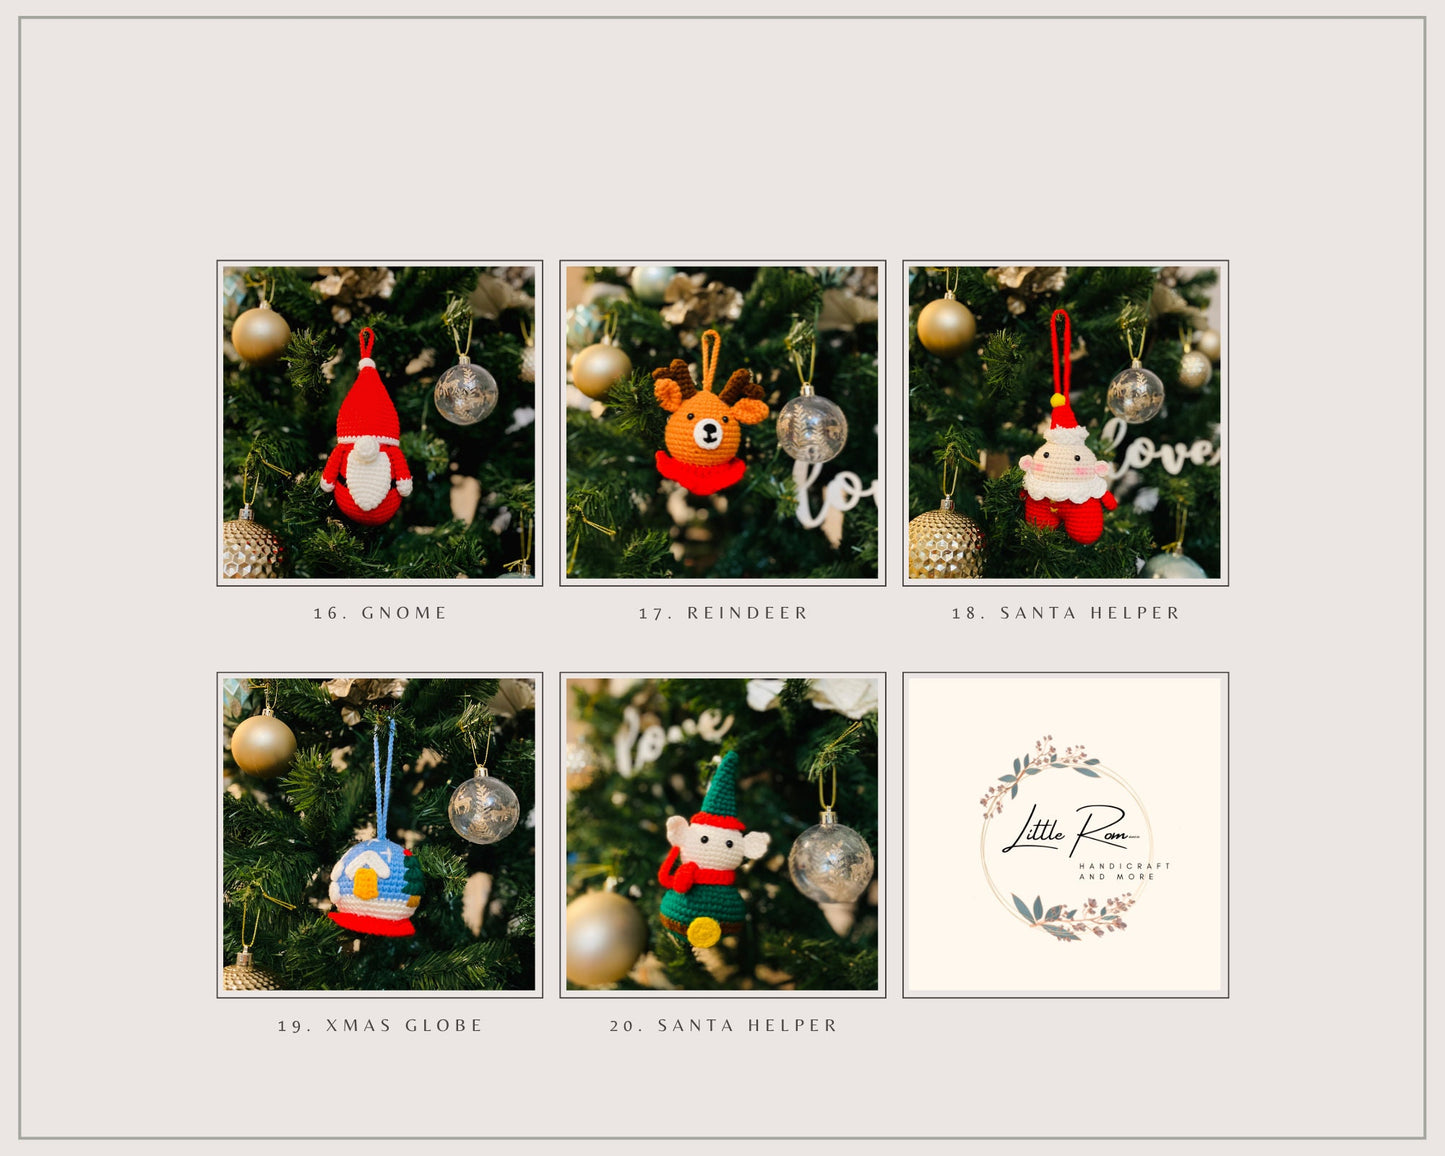 Christmas Crochet Ornaments - Santa, Reindeer, Snowman and more...